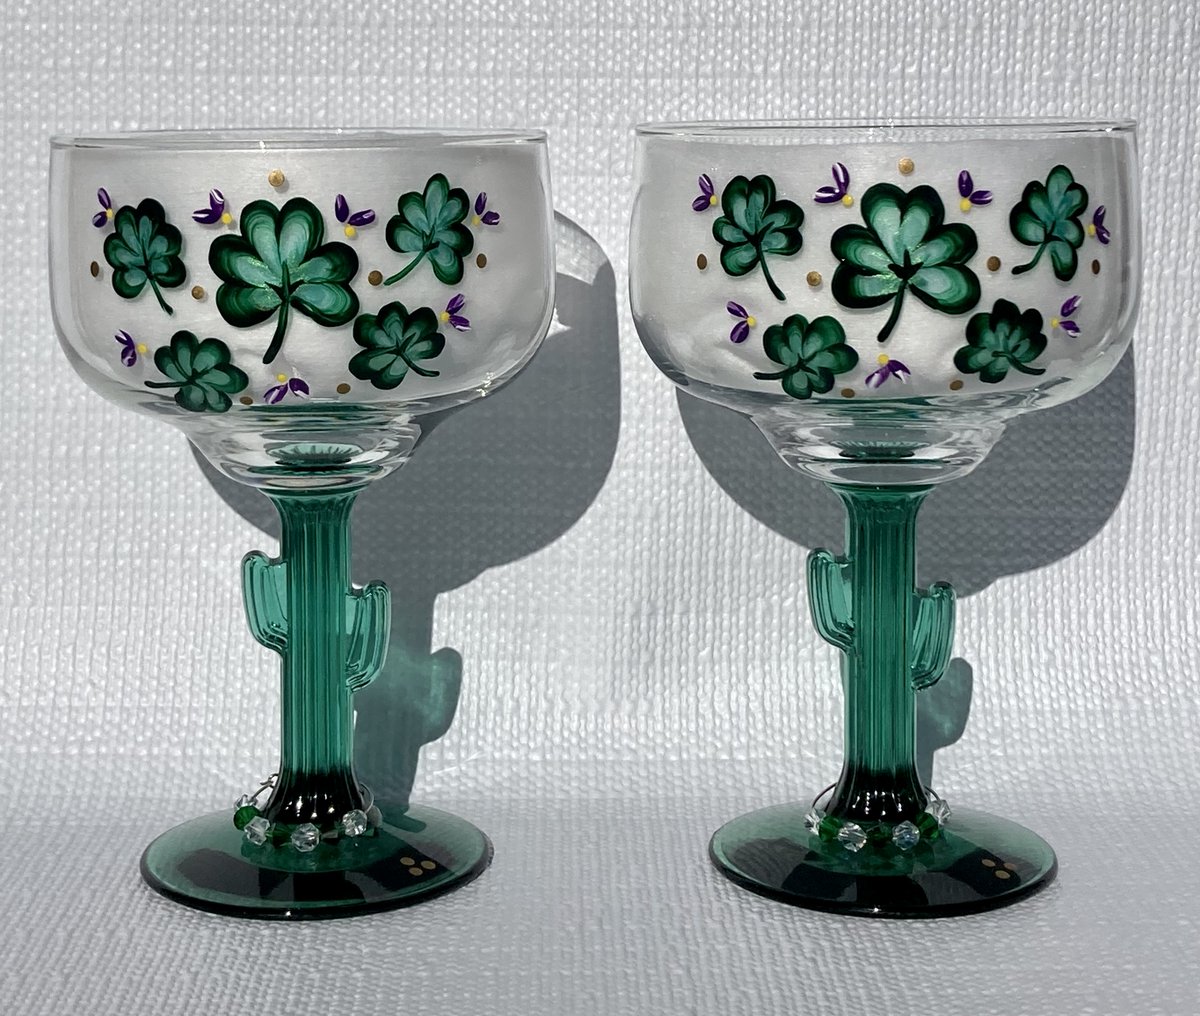 etsy.com/listing/114006… #margaritaglasses #shamrockglasses #marchbirthdaygift #TMTinsta #irishglasses #cactusglasses #shamrocks